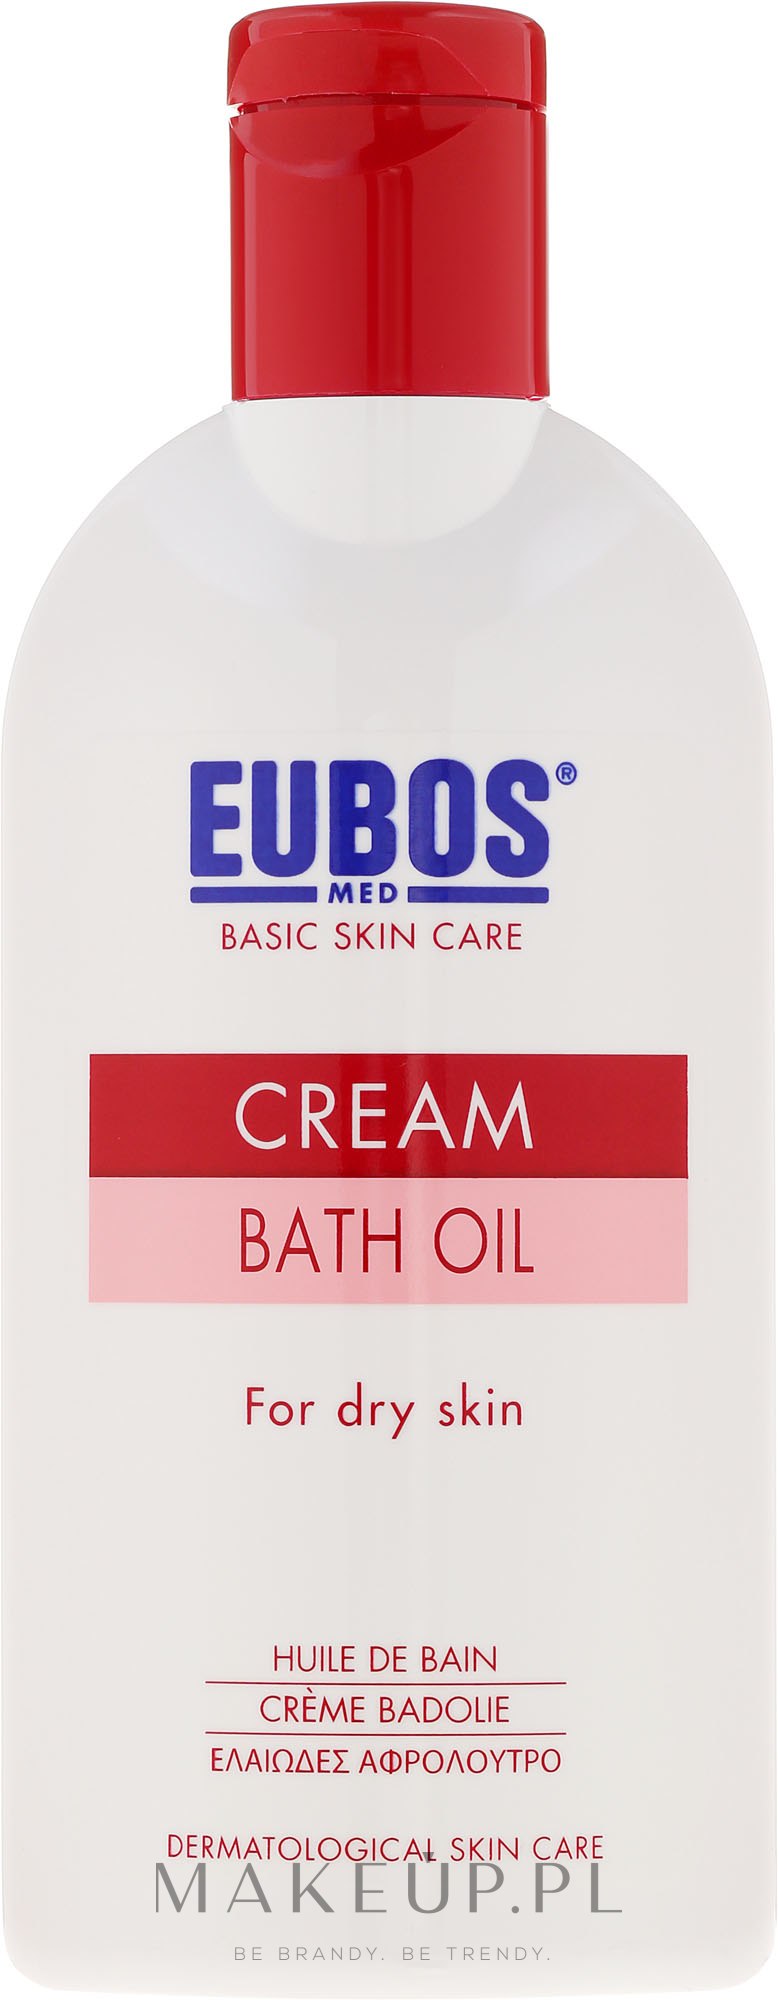 Kremowy olejek do kąpieli do skóry suchej - Eubos Med Basic Skin Care Cream Bath Oil For Dry Skin — Zdjęcie 200 ml